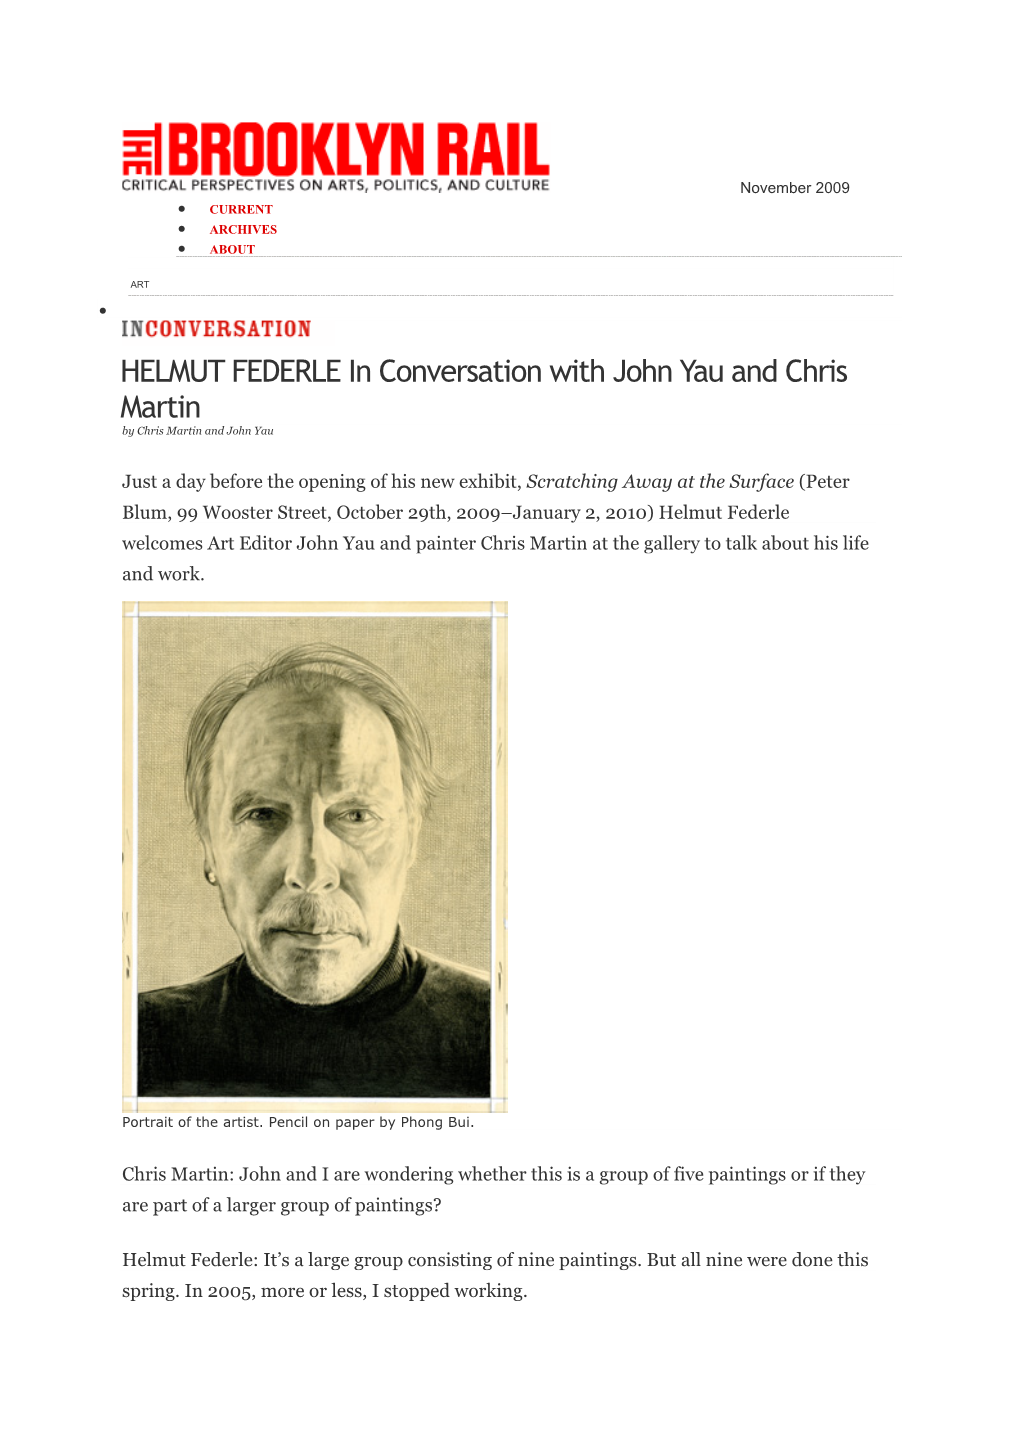 HELMUT FEDERLE in Conversation with John Yau and Chris Martin by Chris Martin and John Yau